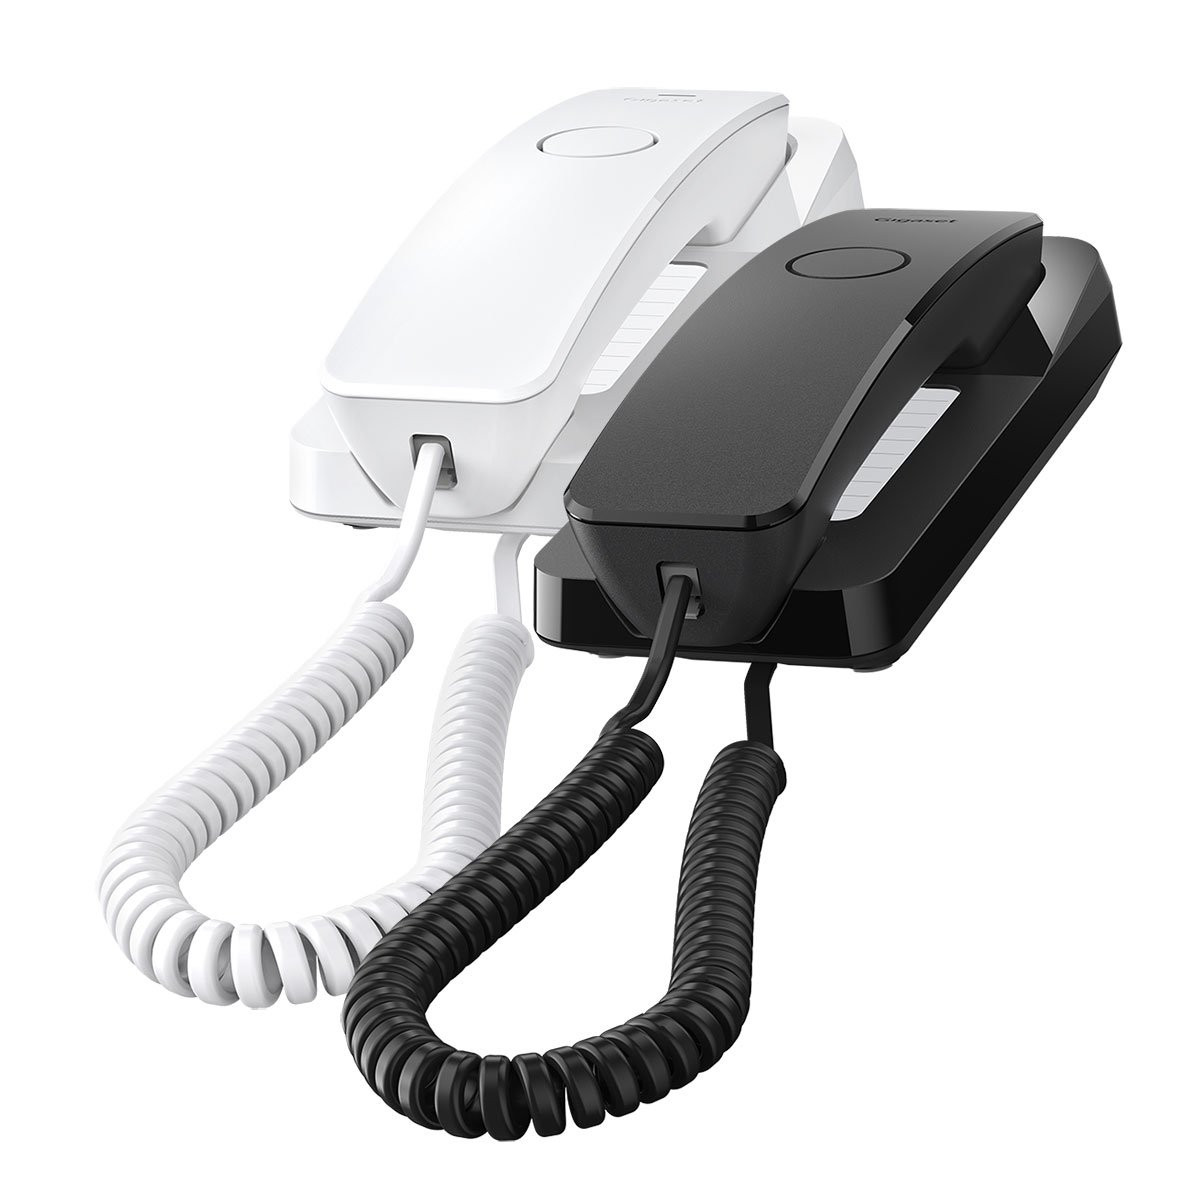 Buy Gigaset DESK 200 corded phone | Schnurgebundene Telefone